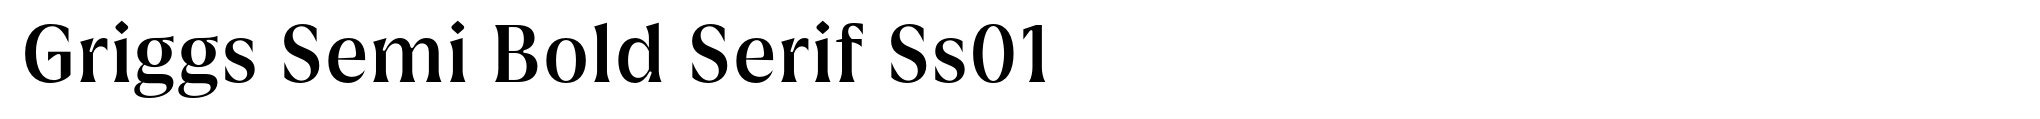 Griggs Semi Bold Serif Ss01 image